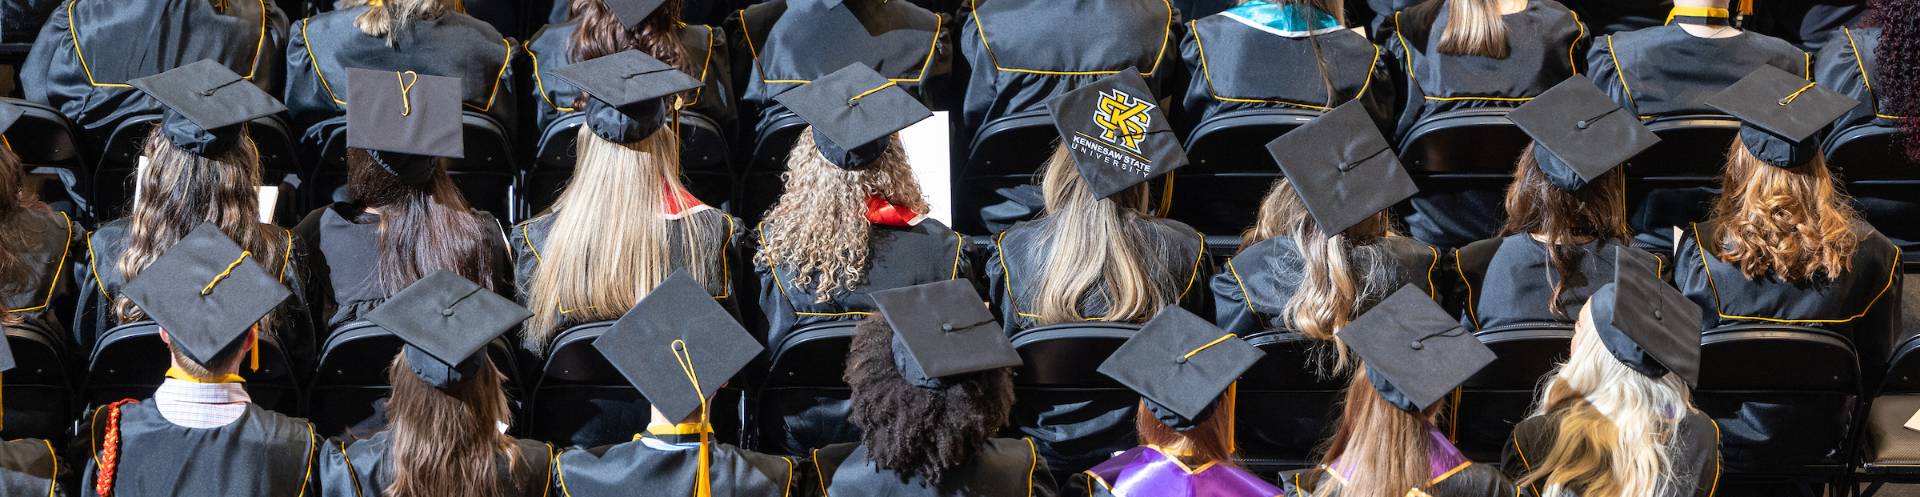 KSU students at graduation